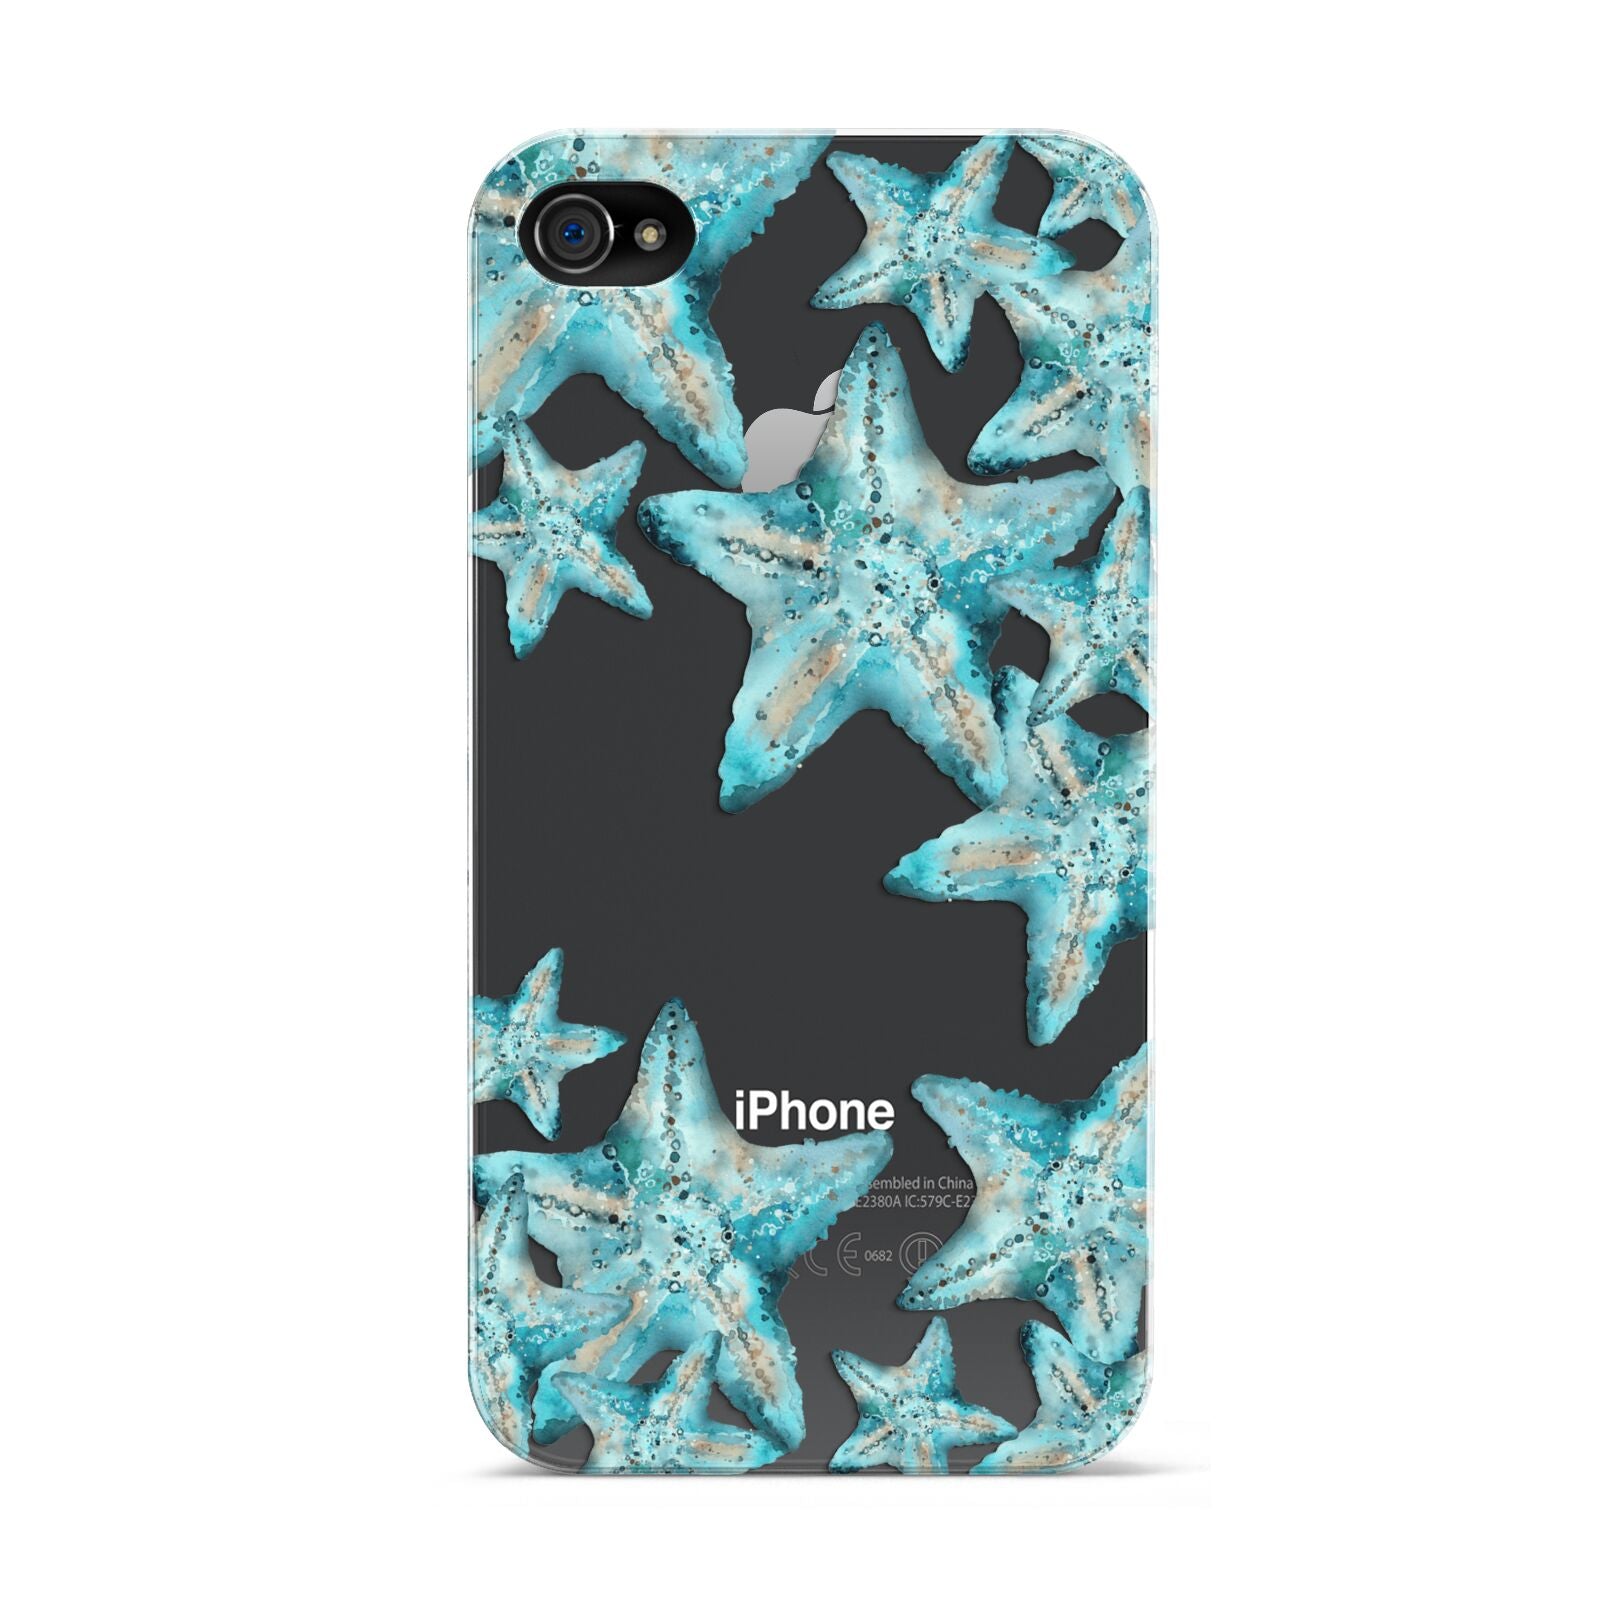 Starfish Apple iPhone 4s Case